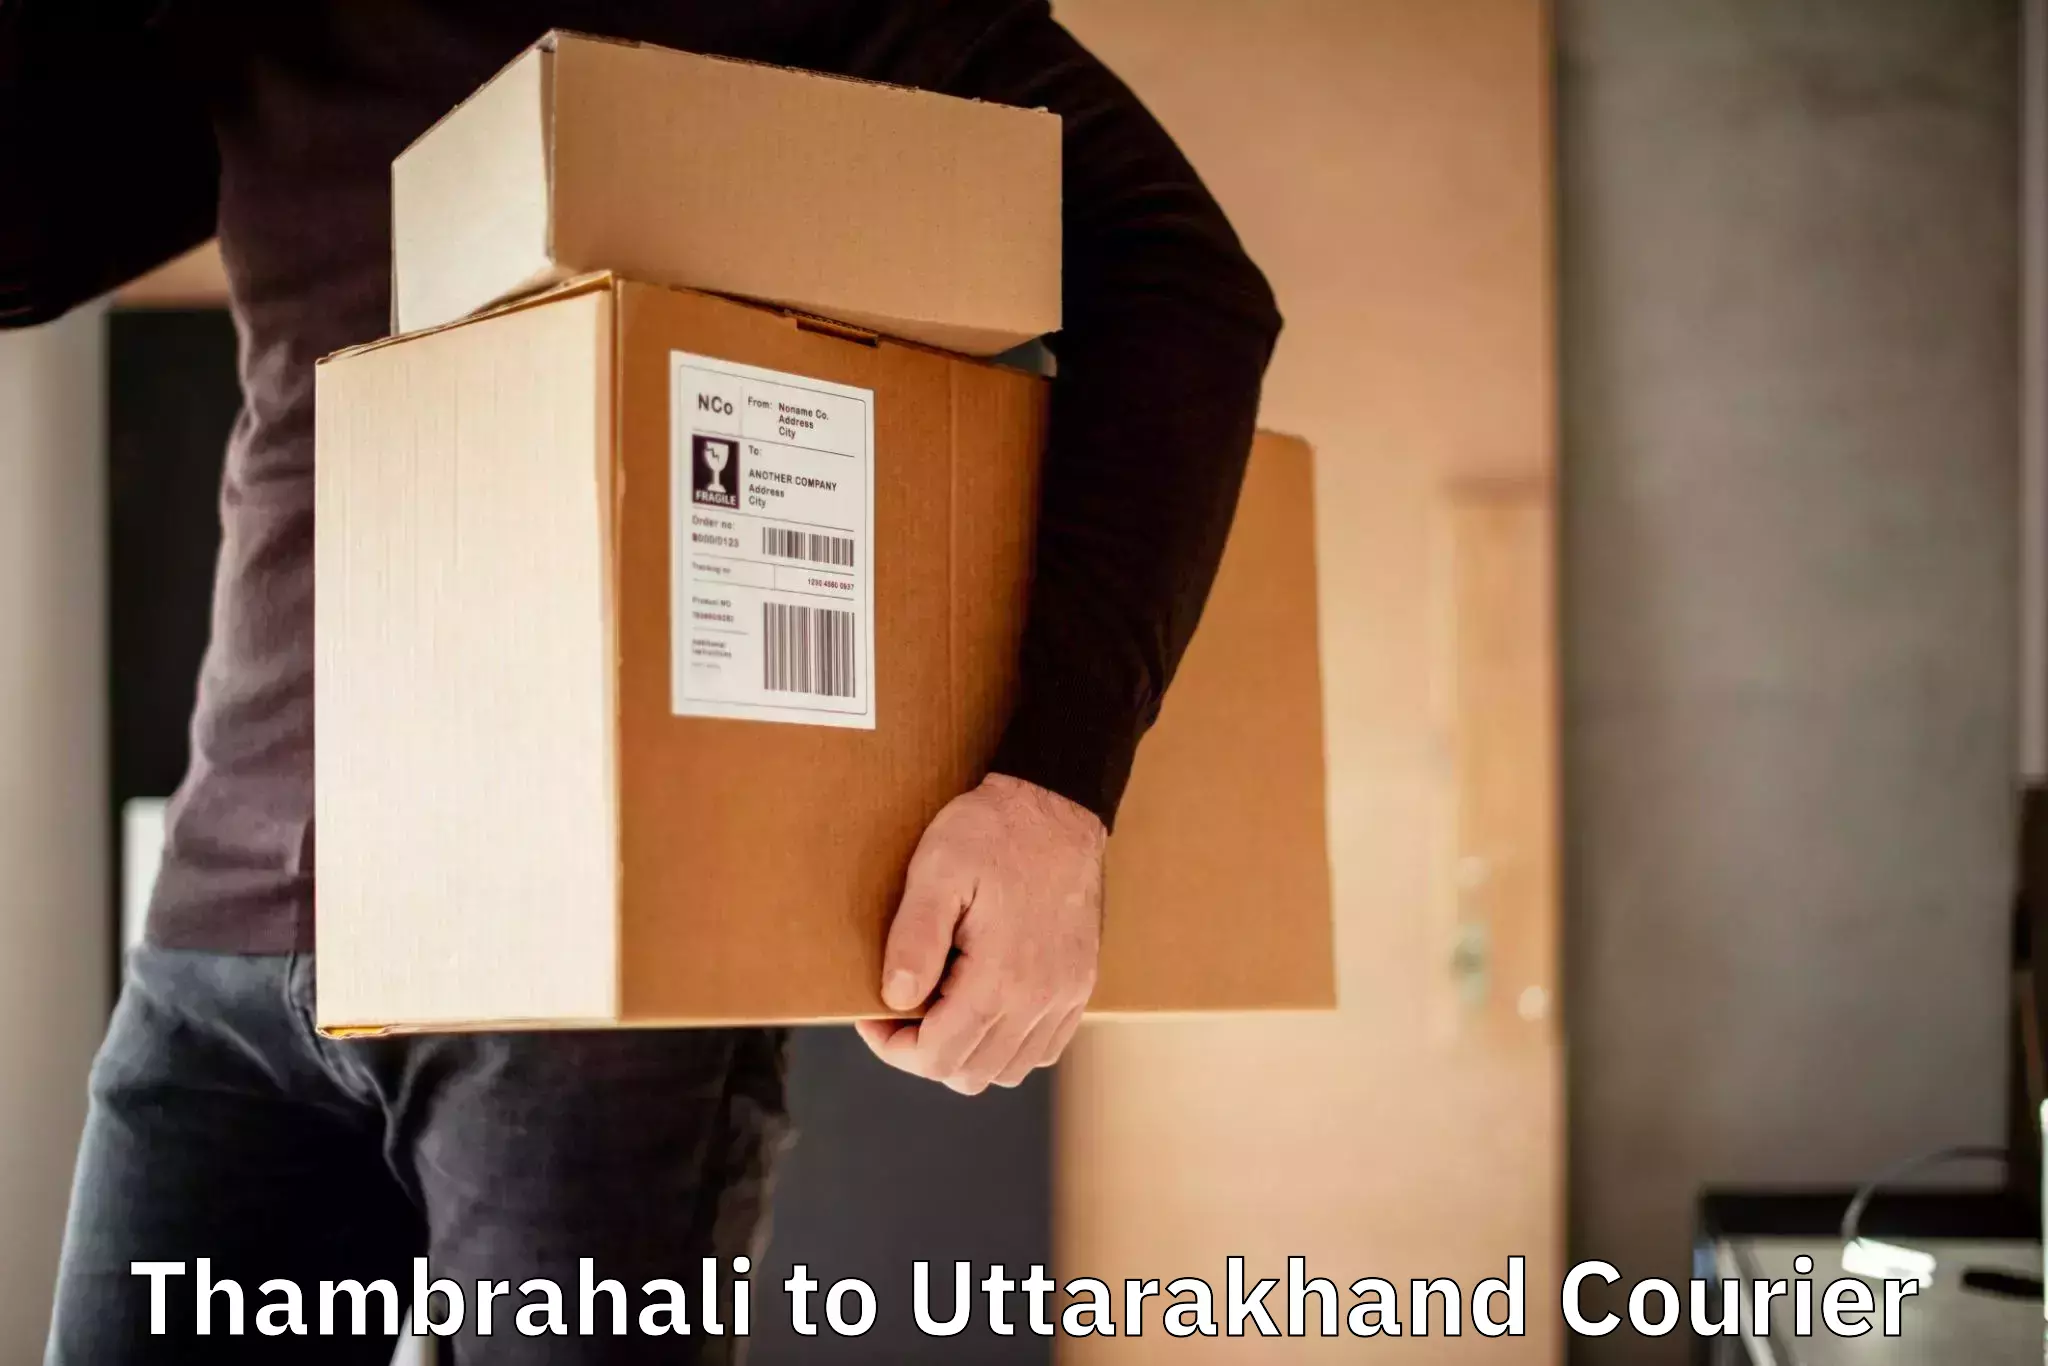 Courier service innovation Thambrahali to Uttarakhand